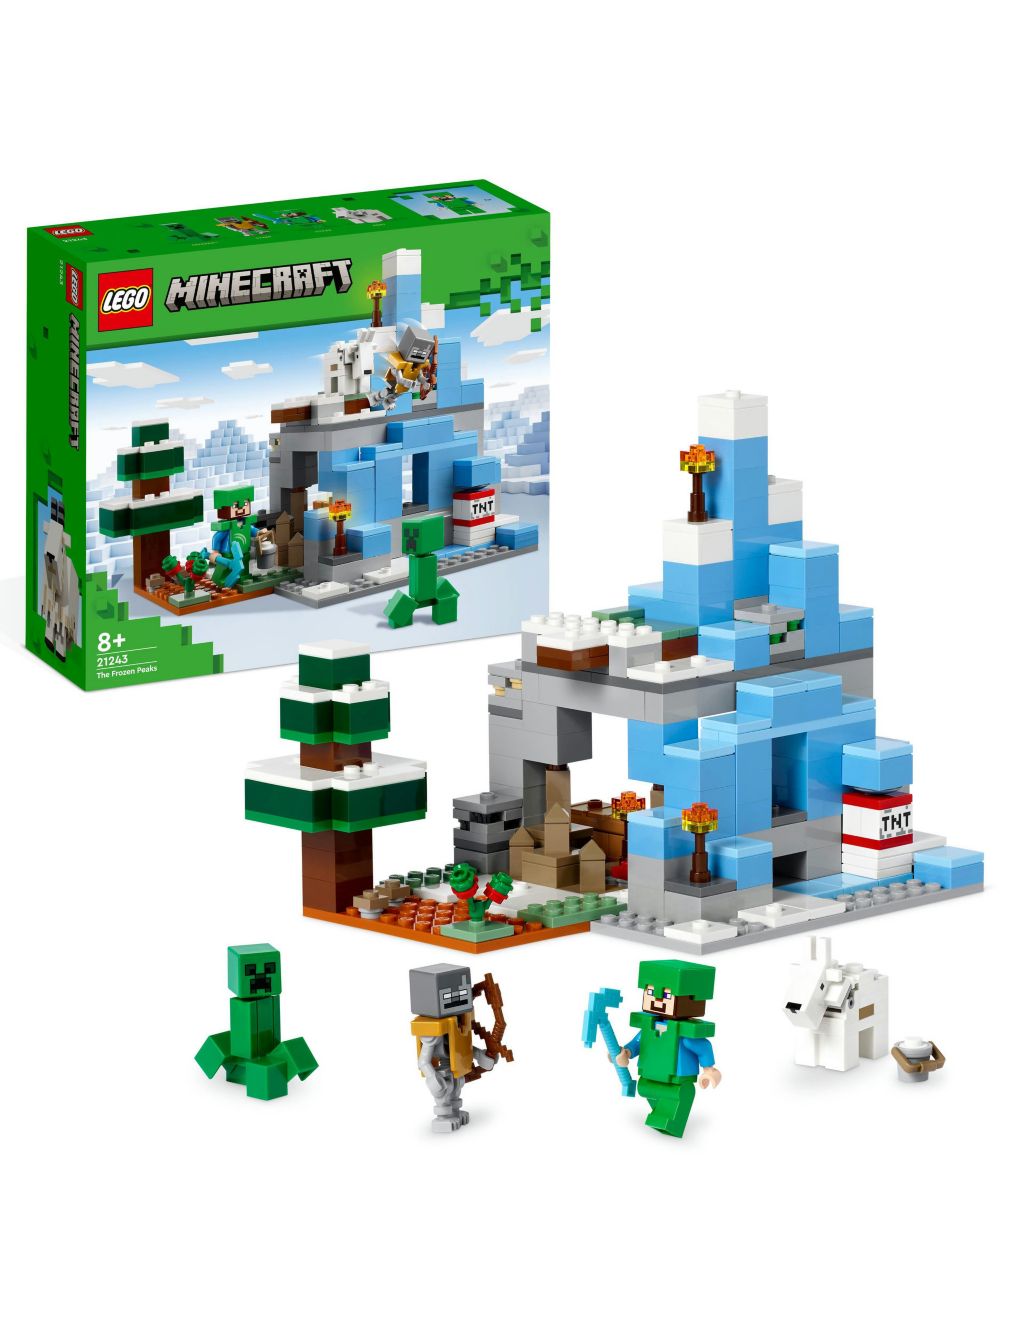 LEGO Minecraft The Frozen Peaks Toy Set (8+ Yrs) image 1